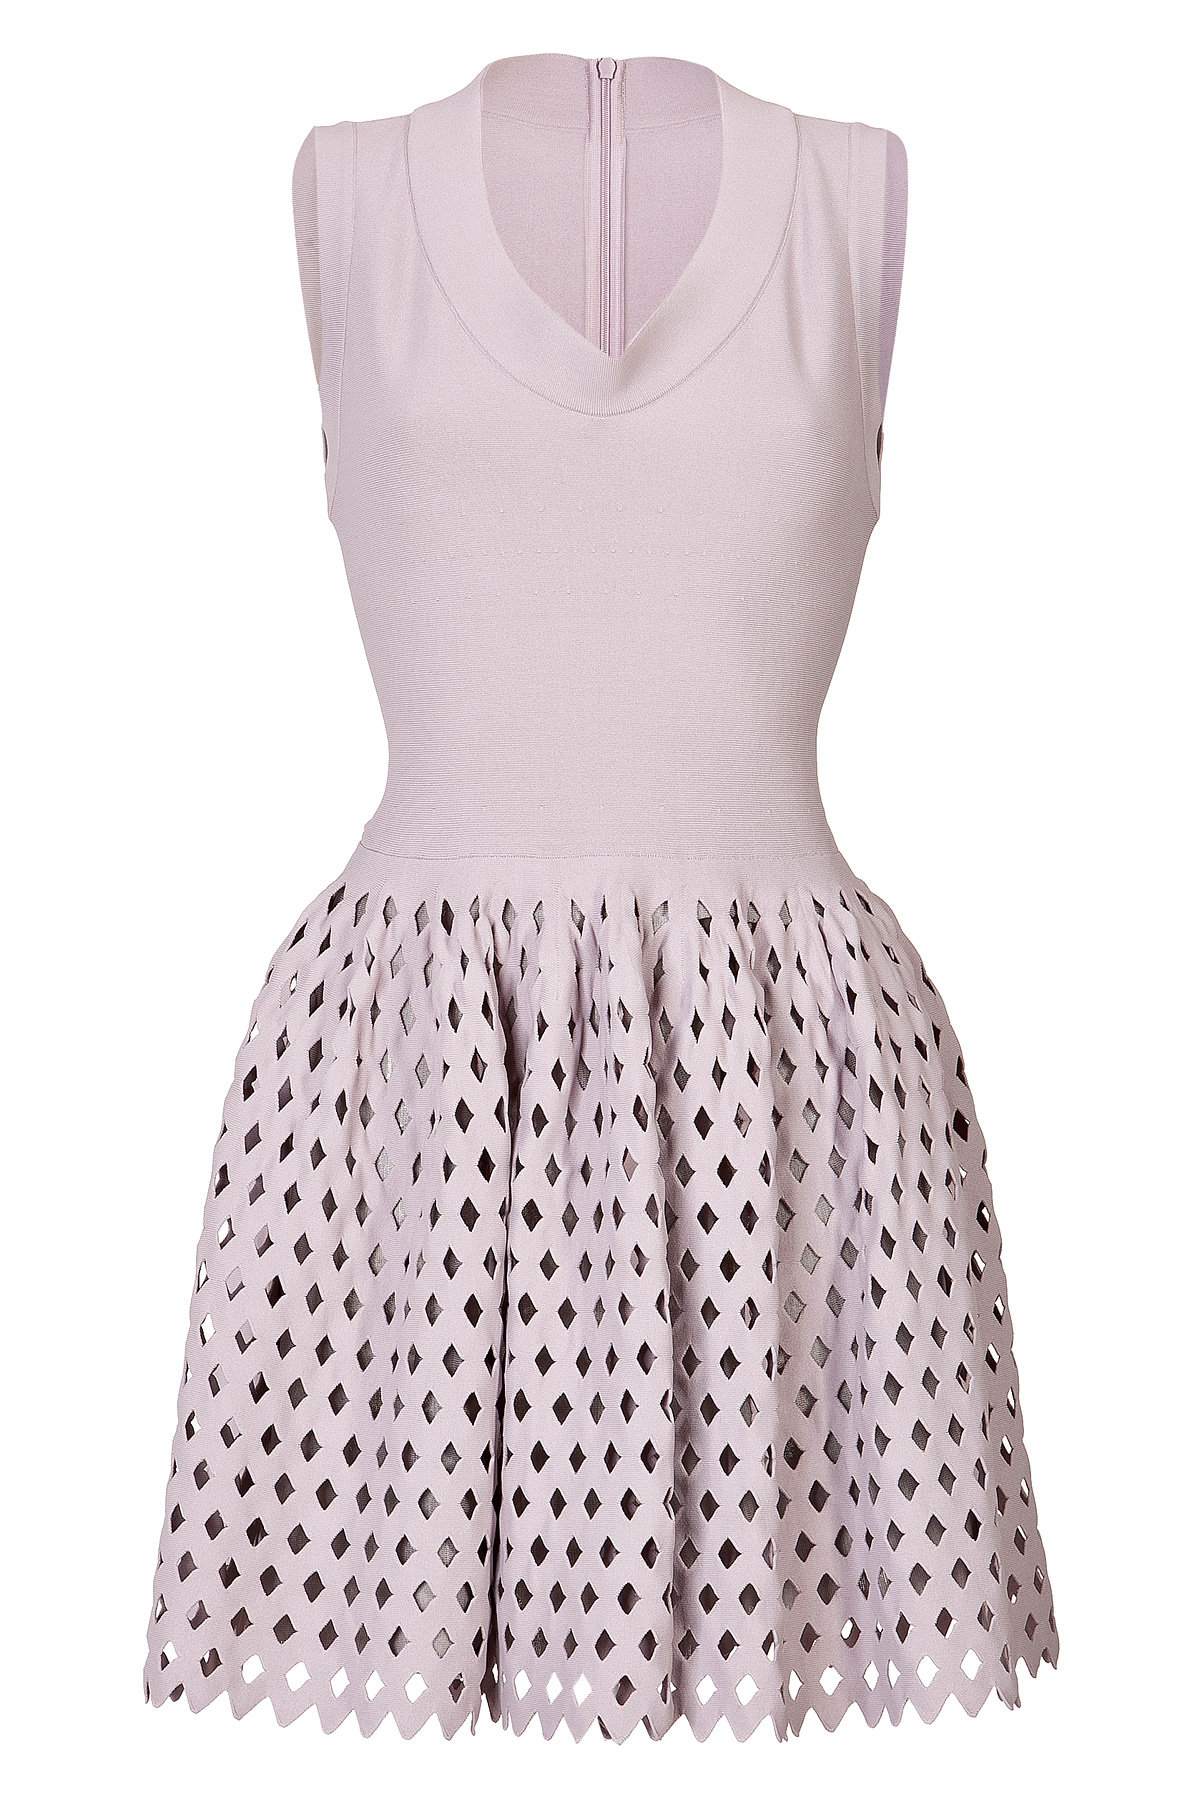 Alaia - Flared Dress with Cutout Skirt